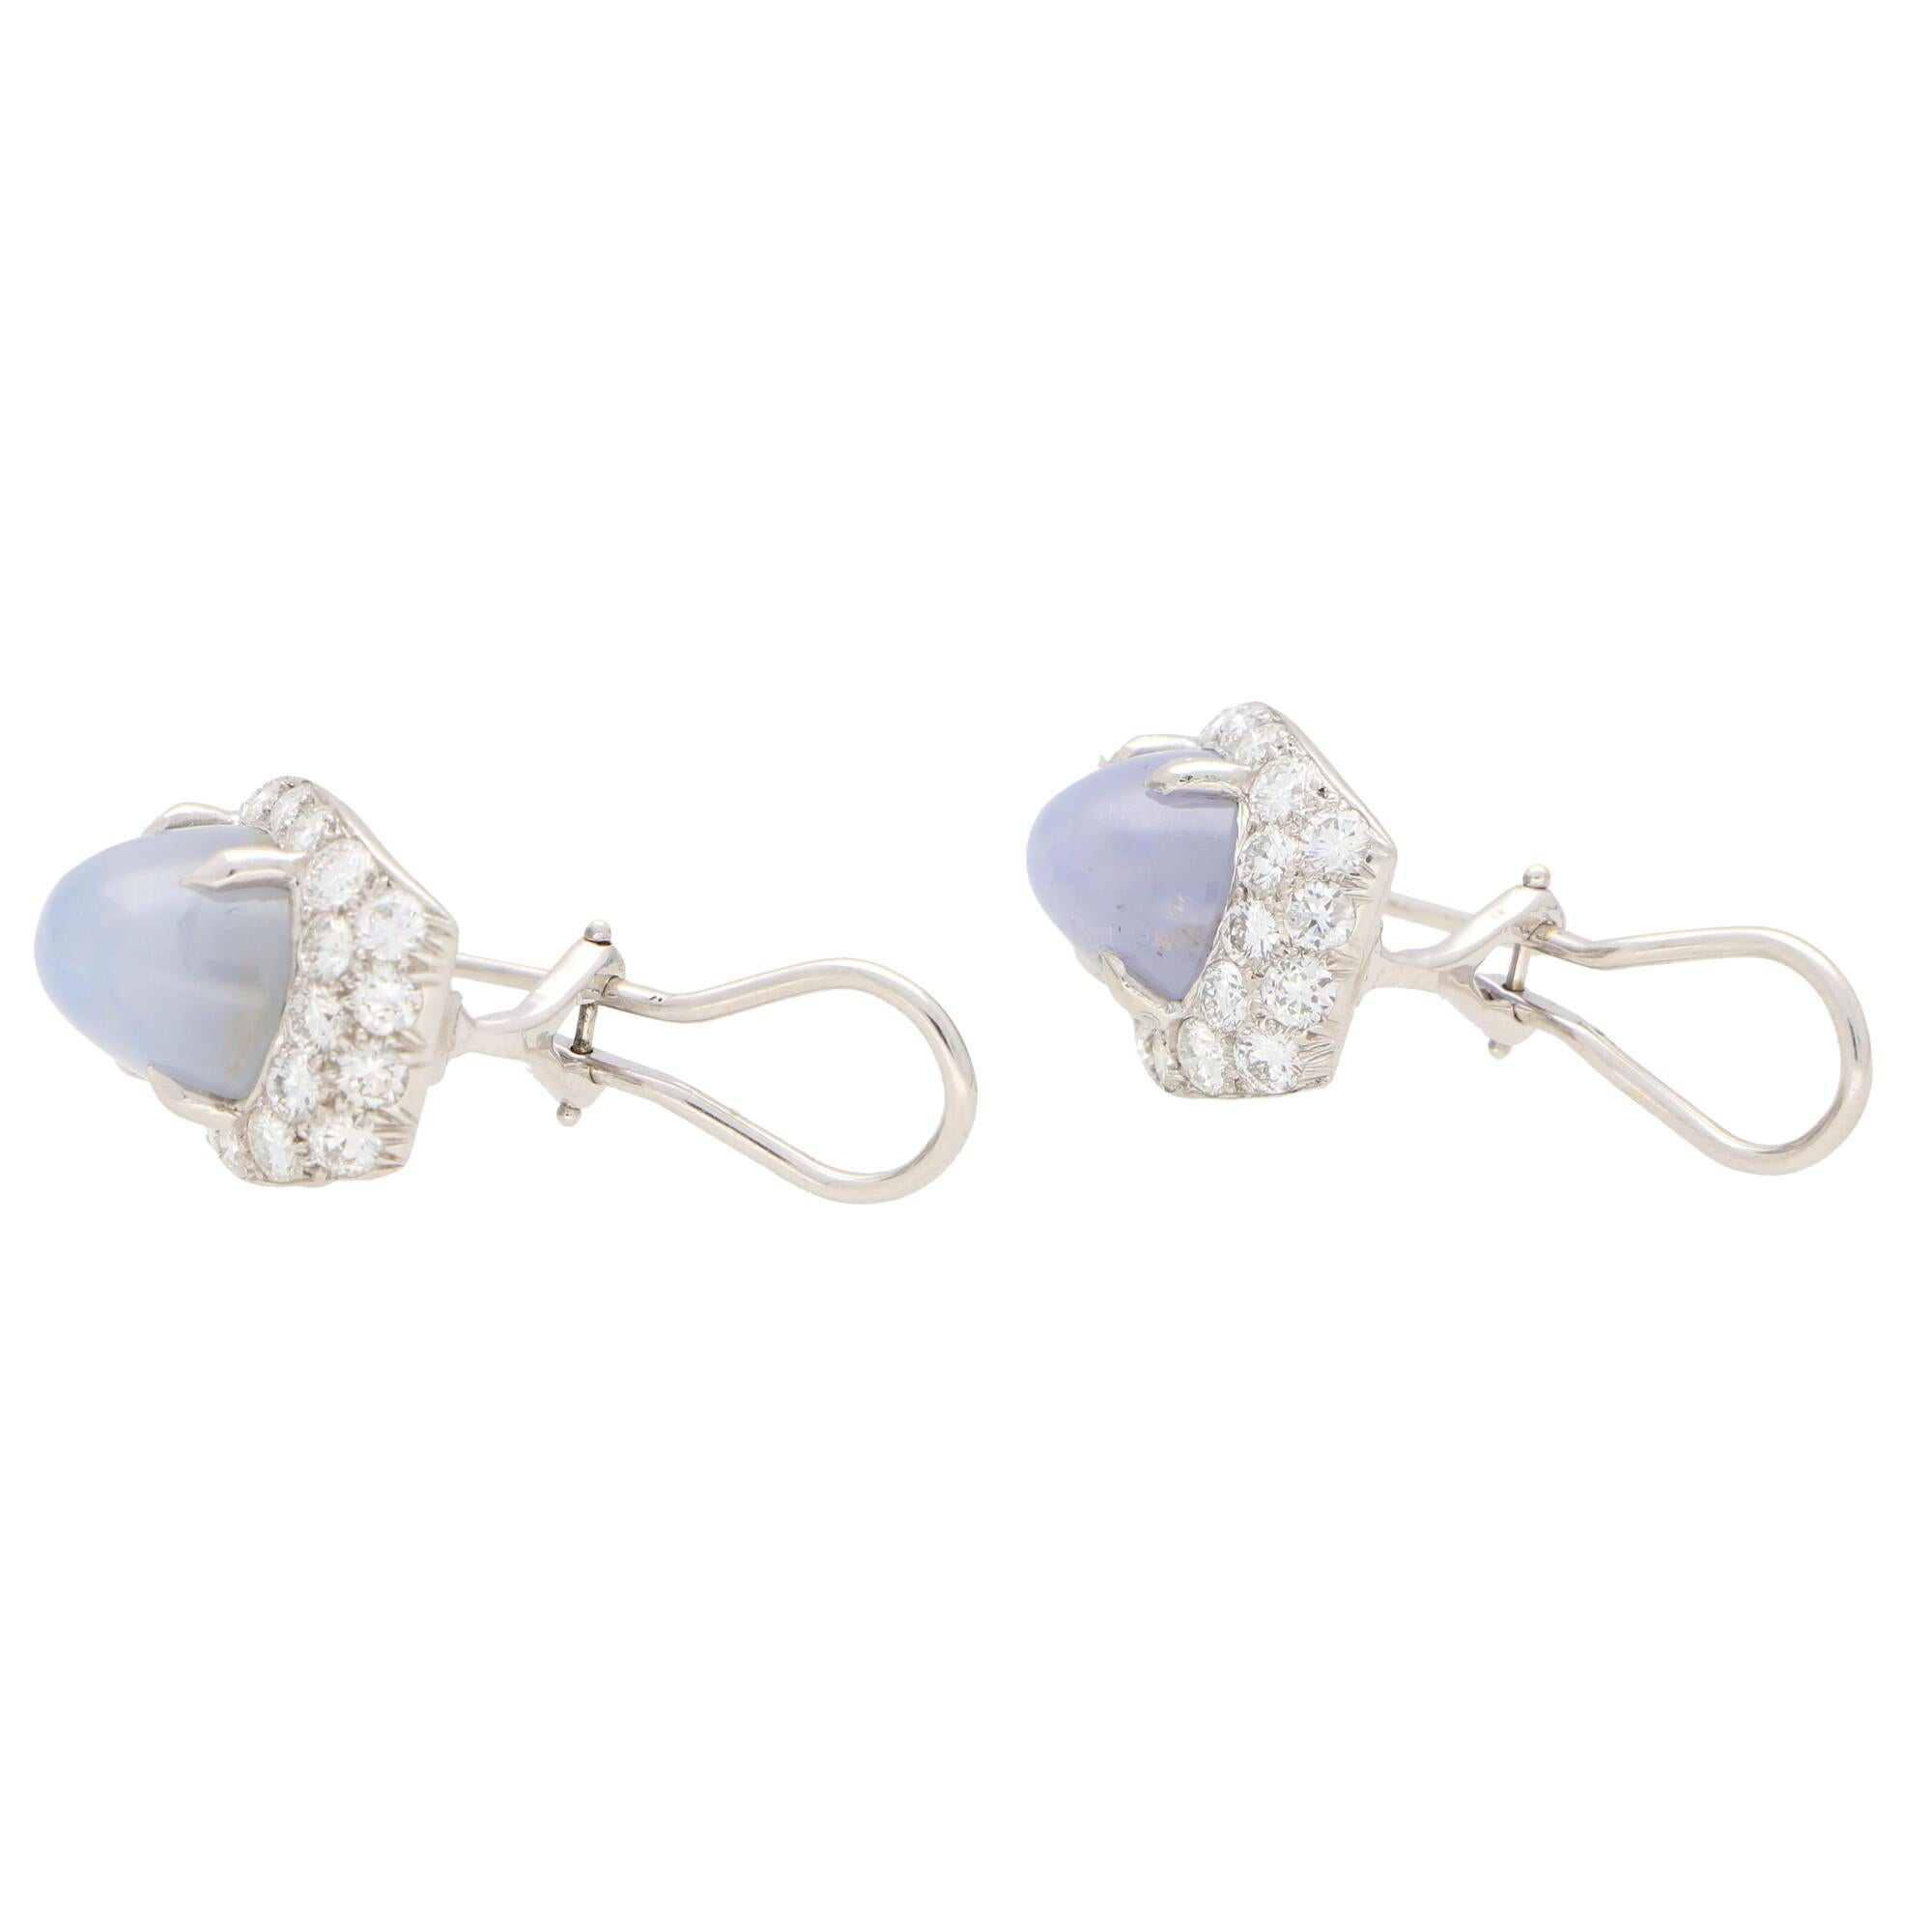 Round Cut Art Deco Inspired Star Sapphire and Diamond Earrings Set in 18 Karat White Gold